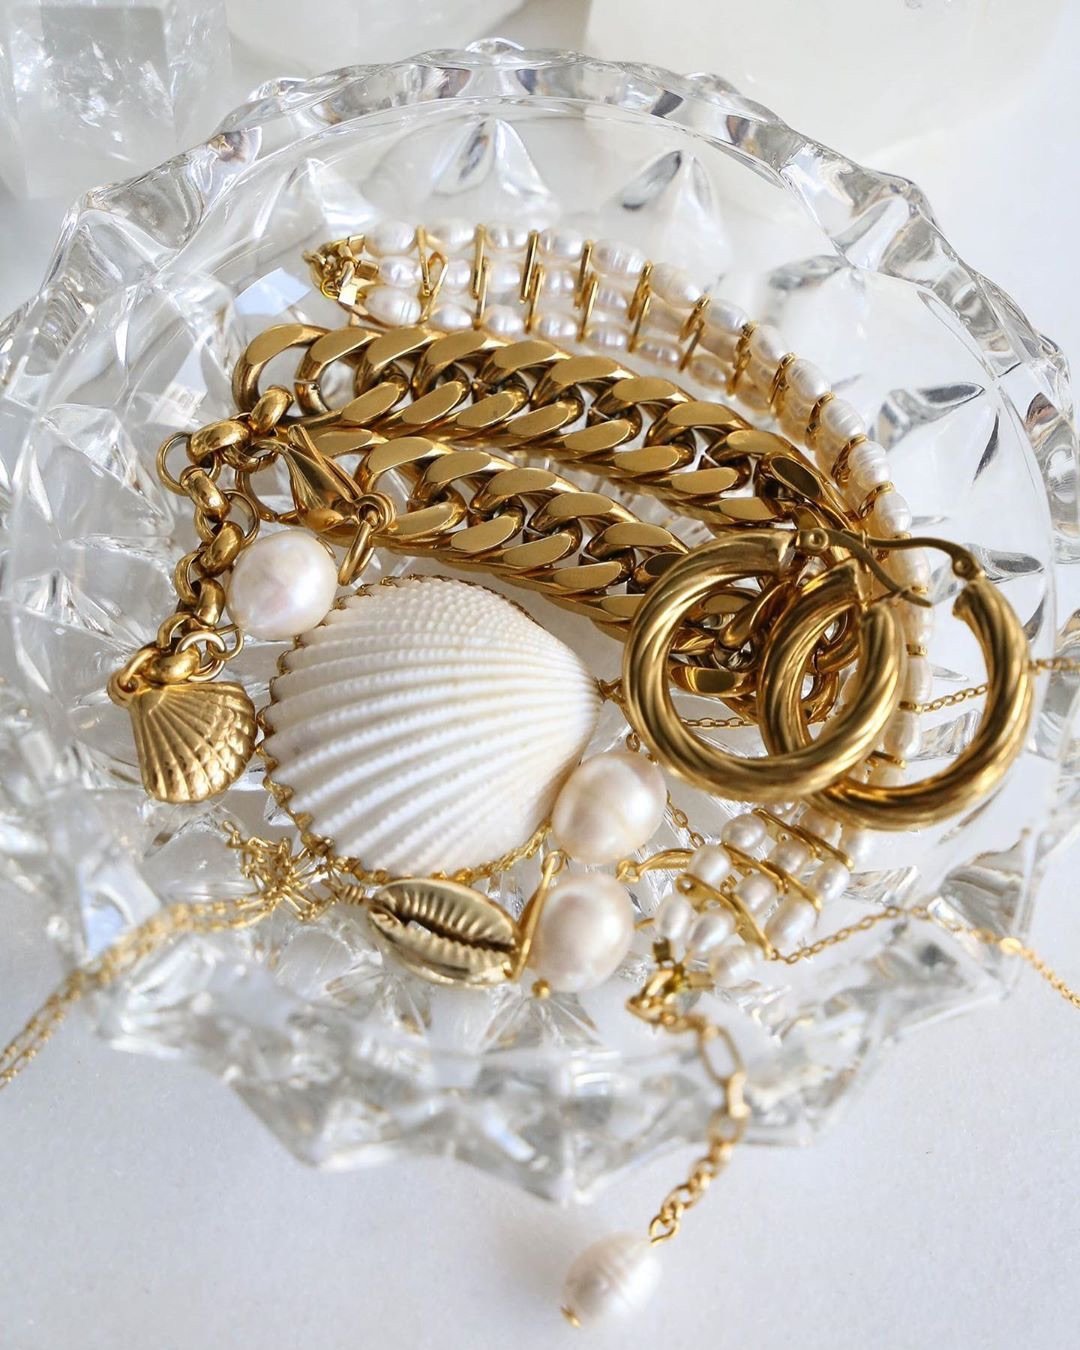 La Mer Bracelet - Boutique Minimaliste has waterproof, durable, elegant and vintage inspired jewelry